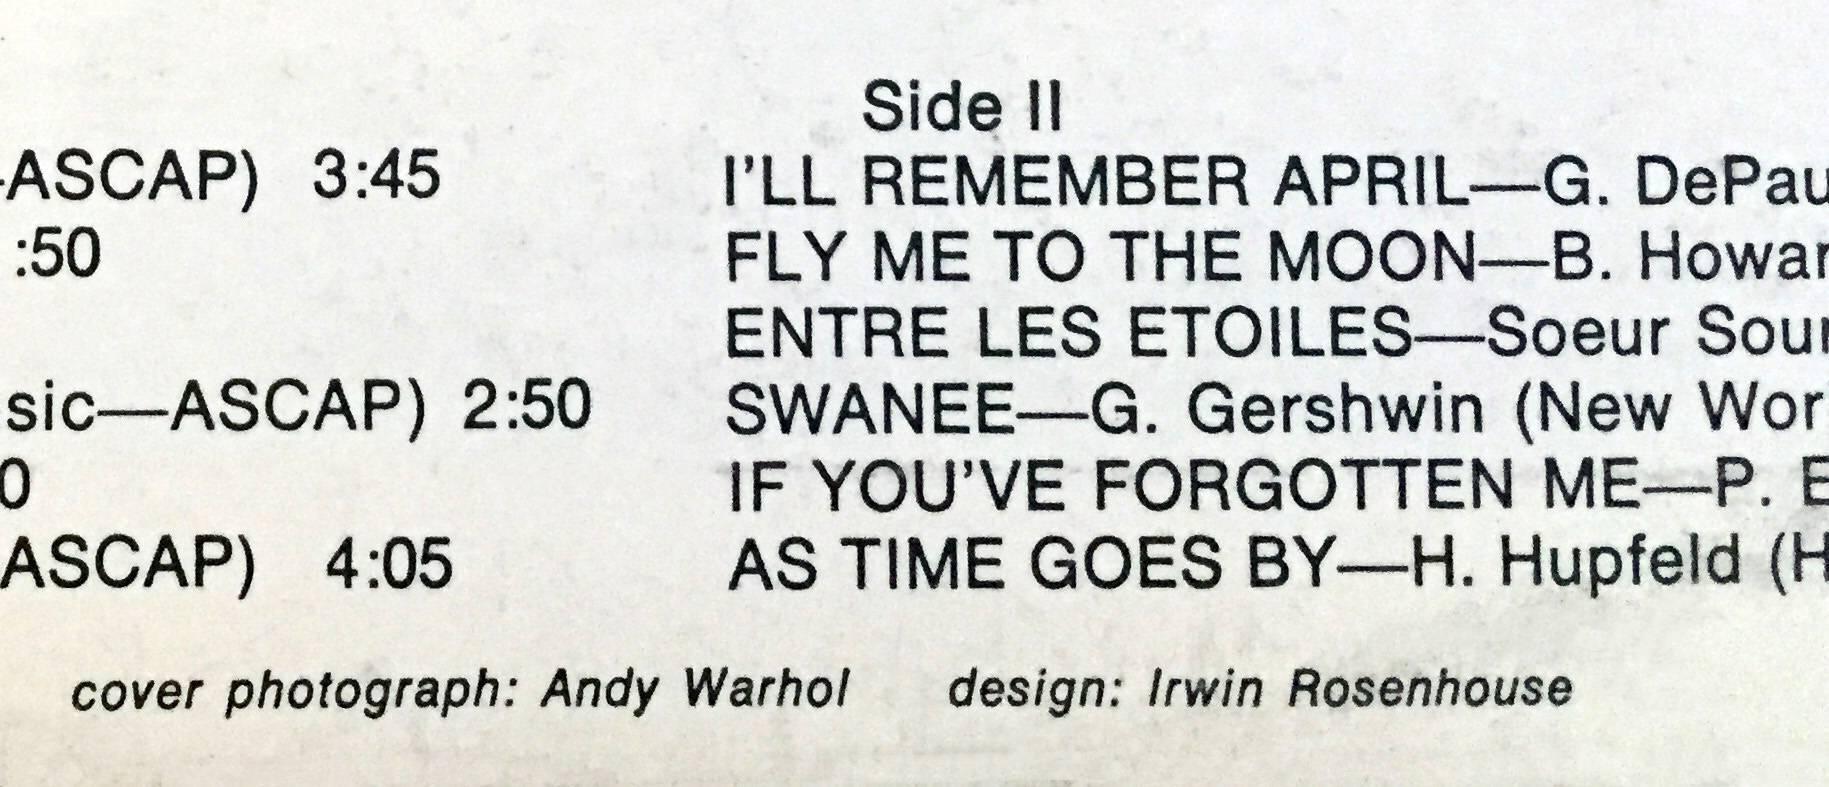 Andy Warhol, Original Album Cover Art 3